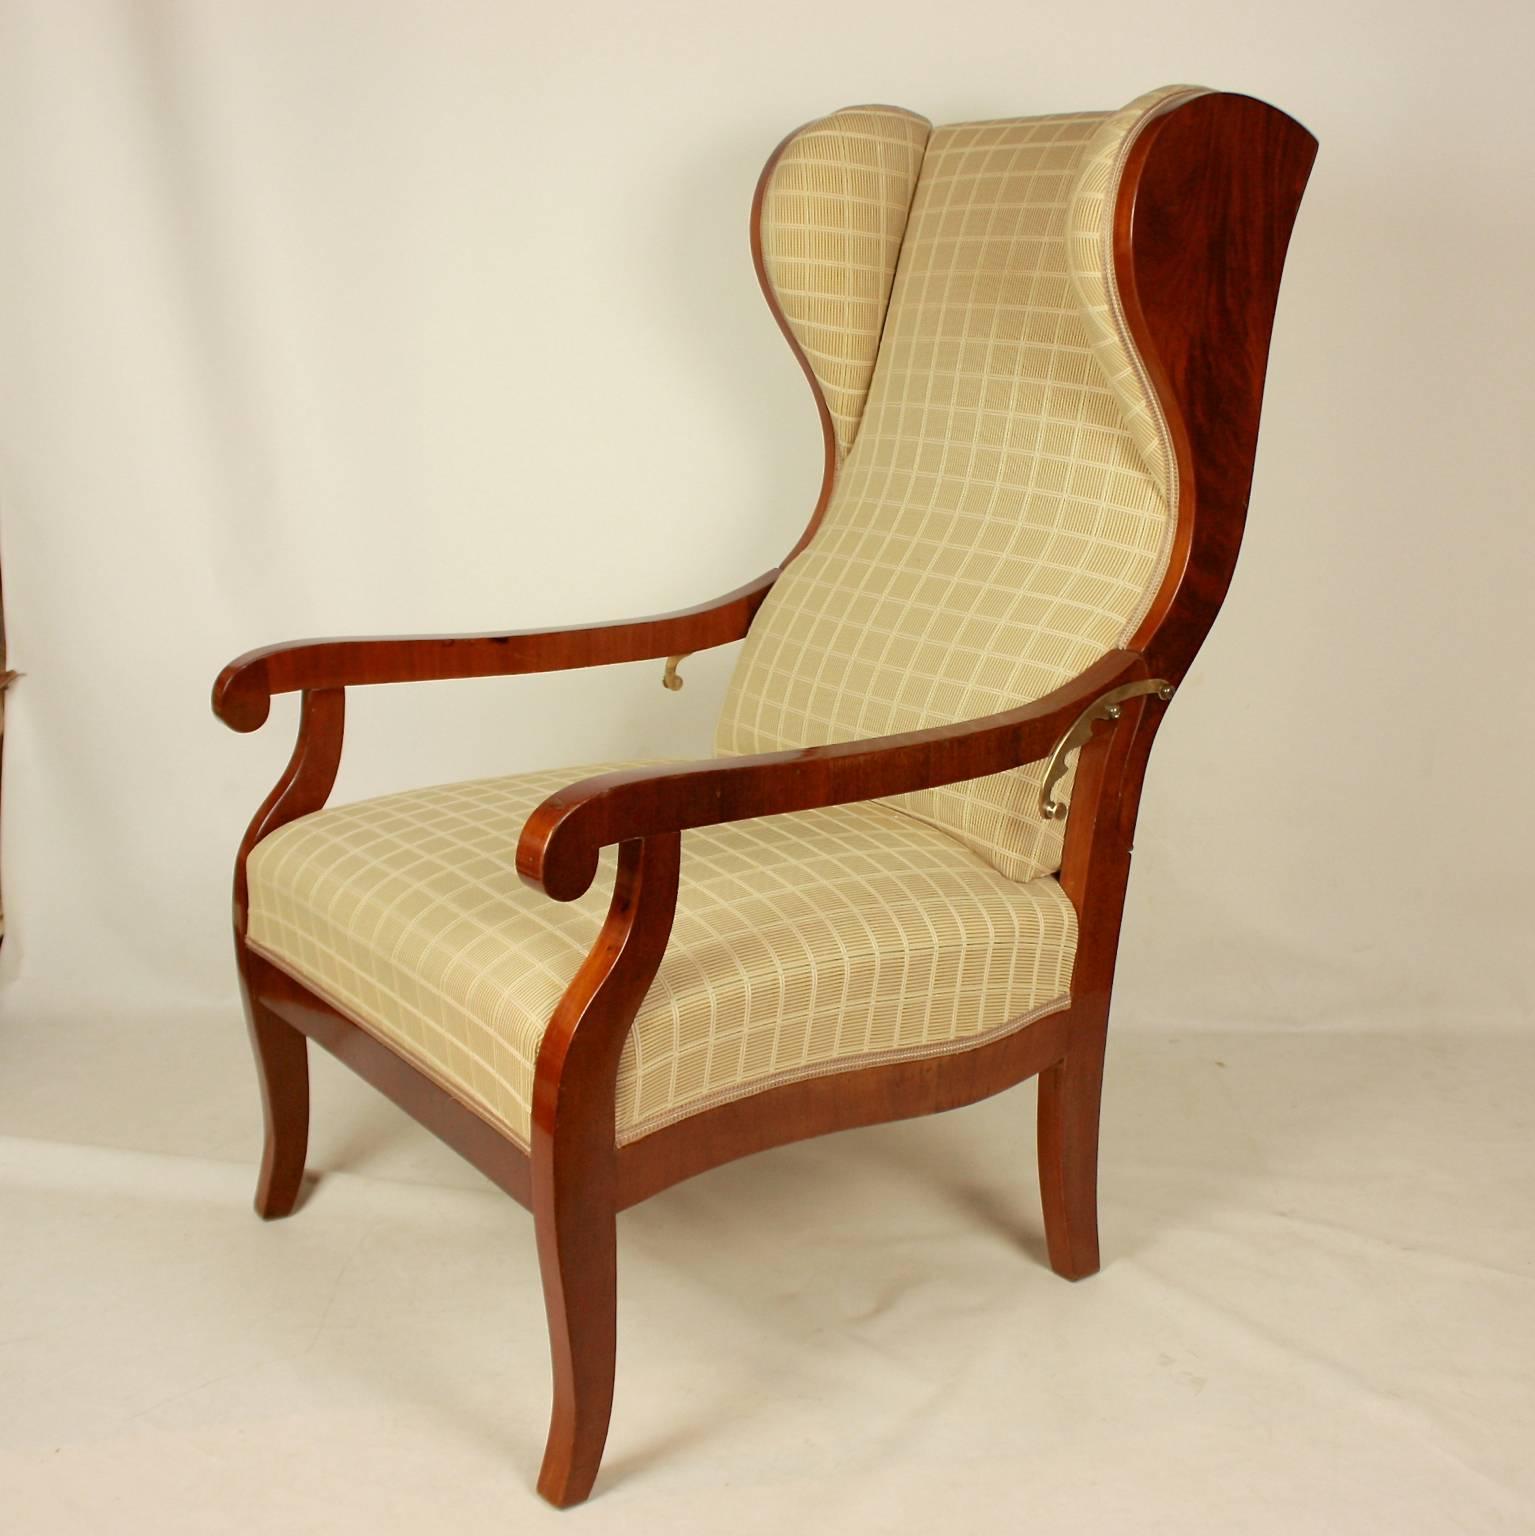 Early 19th Century Large Biedermeier Declining Wing Chair, circa 1820